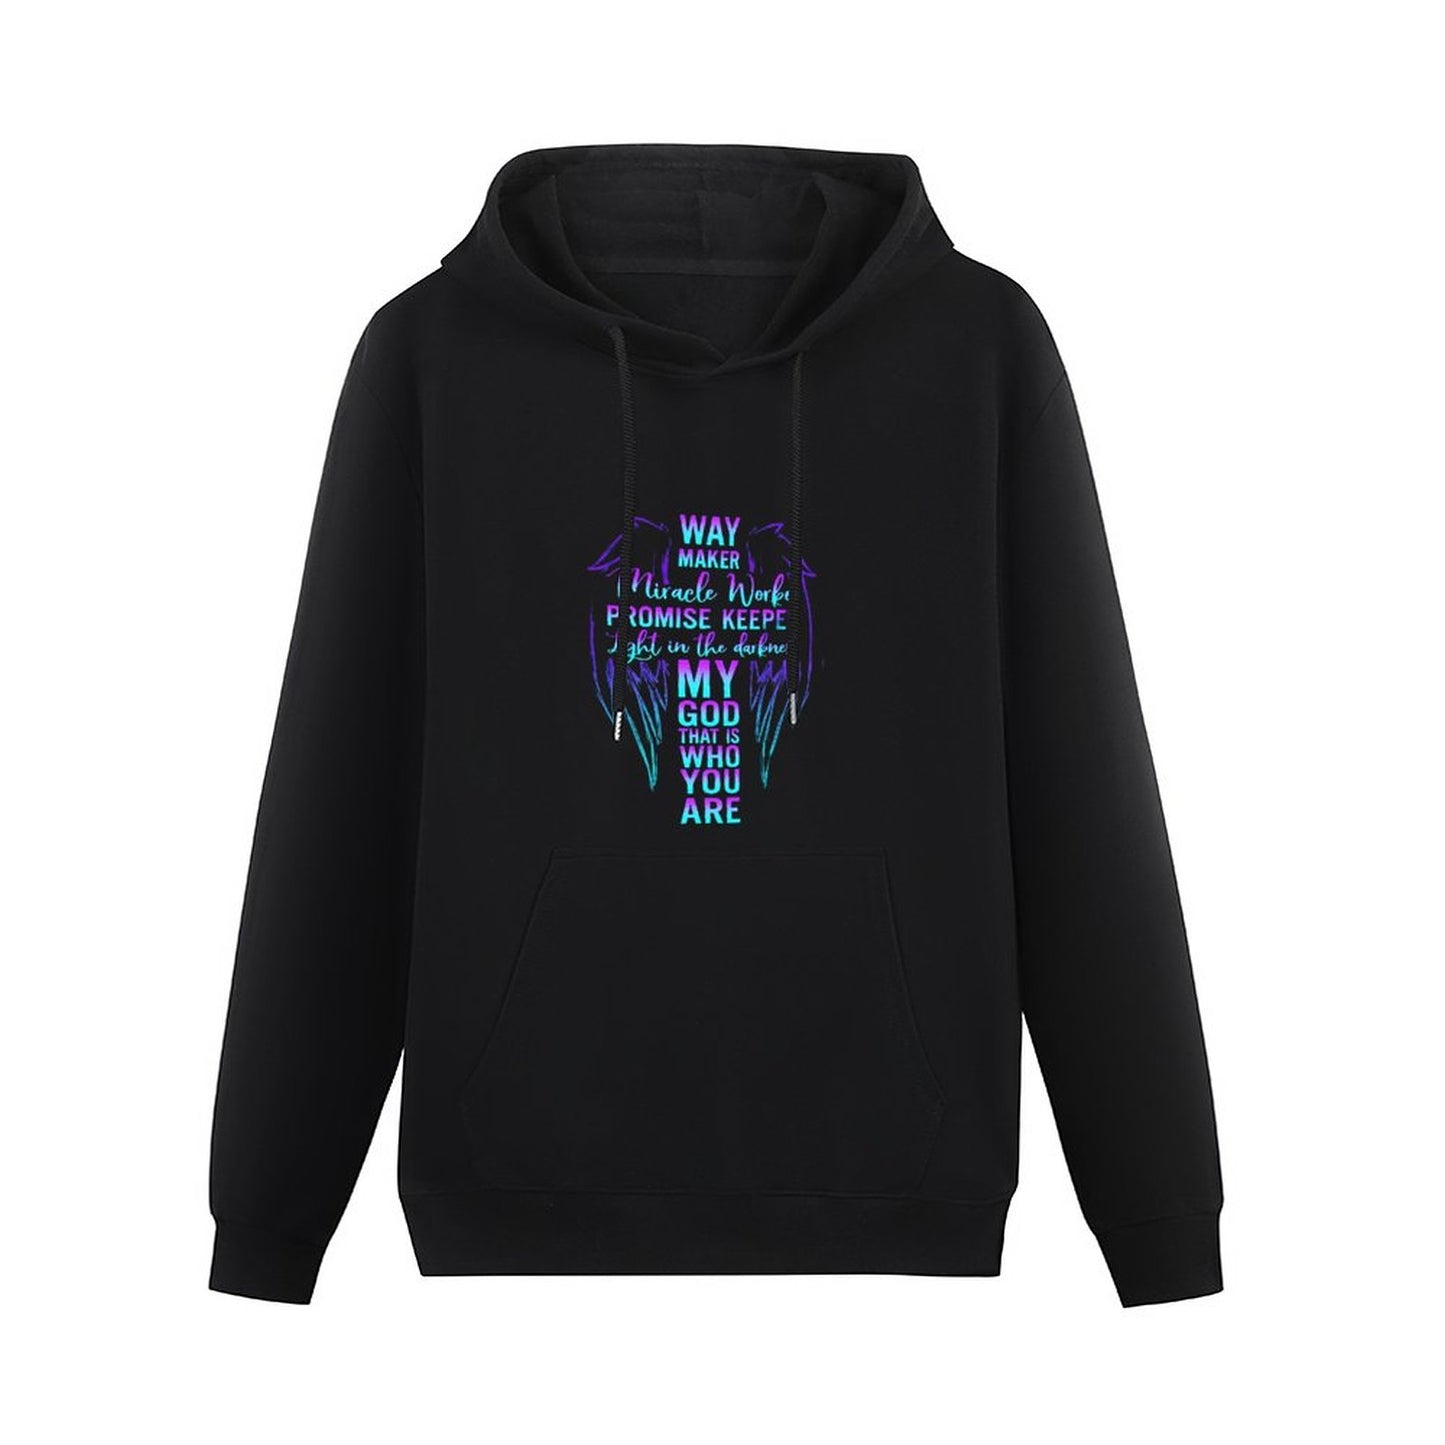 Online DIY Women's Hoodie Sweatshirt Promise Keeper Light in The Darkness Shirt